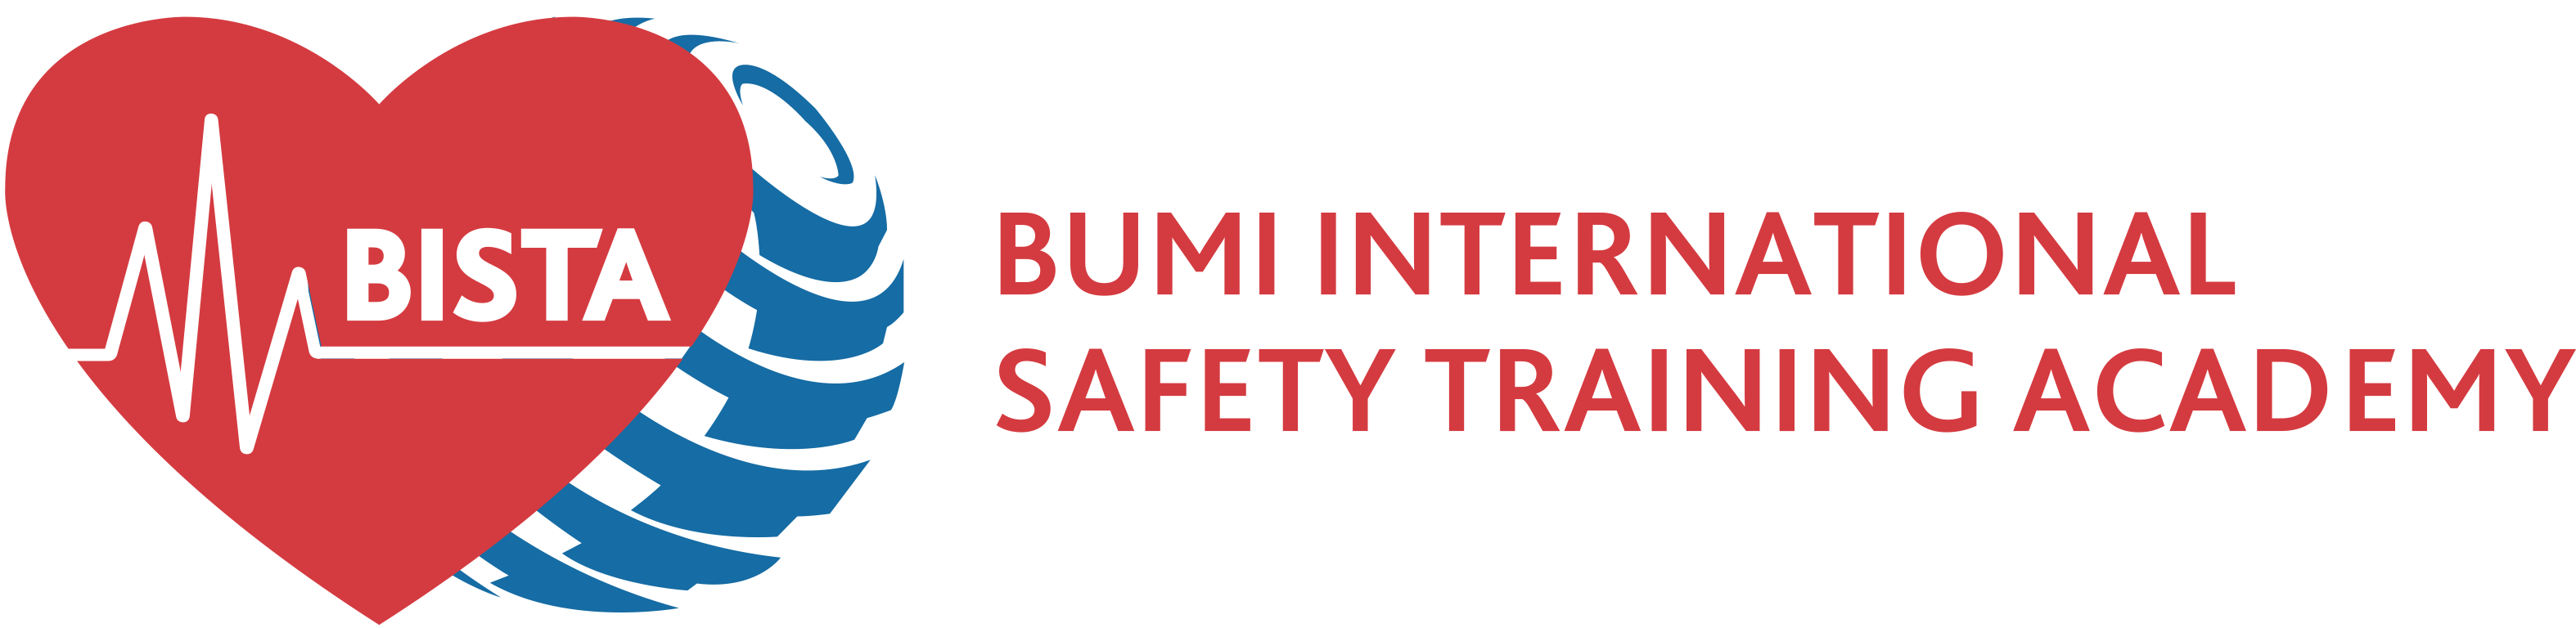 Bumi International Safety Training Academy Logo